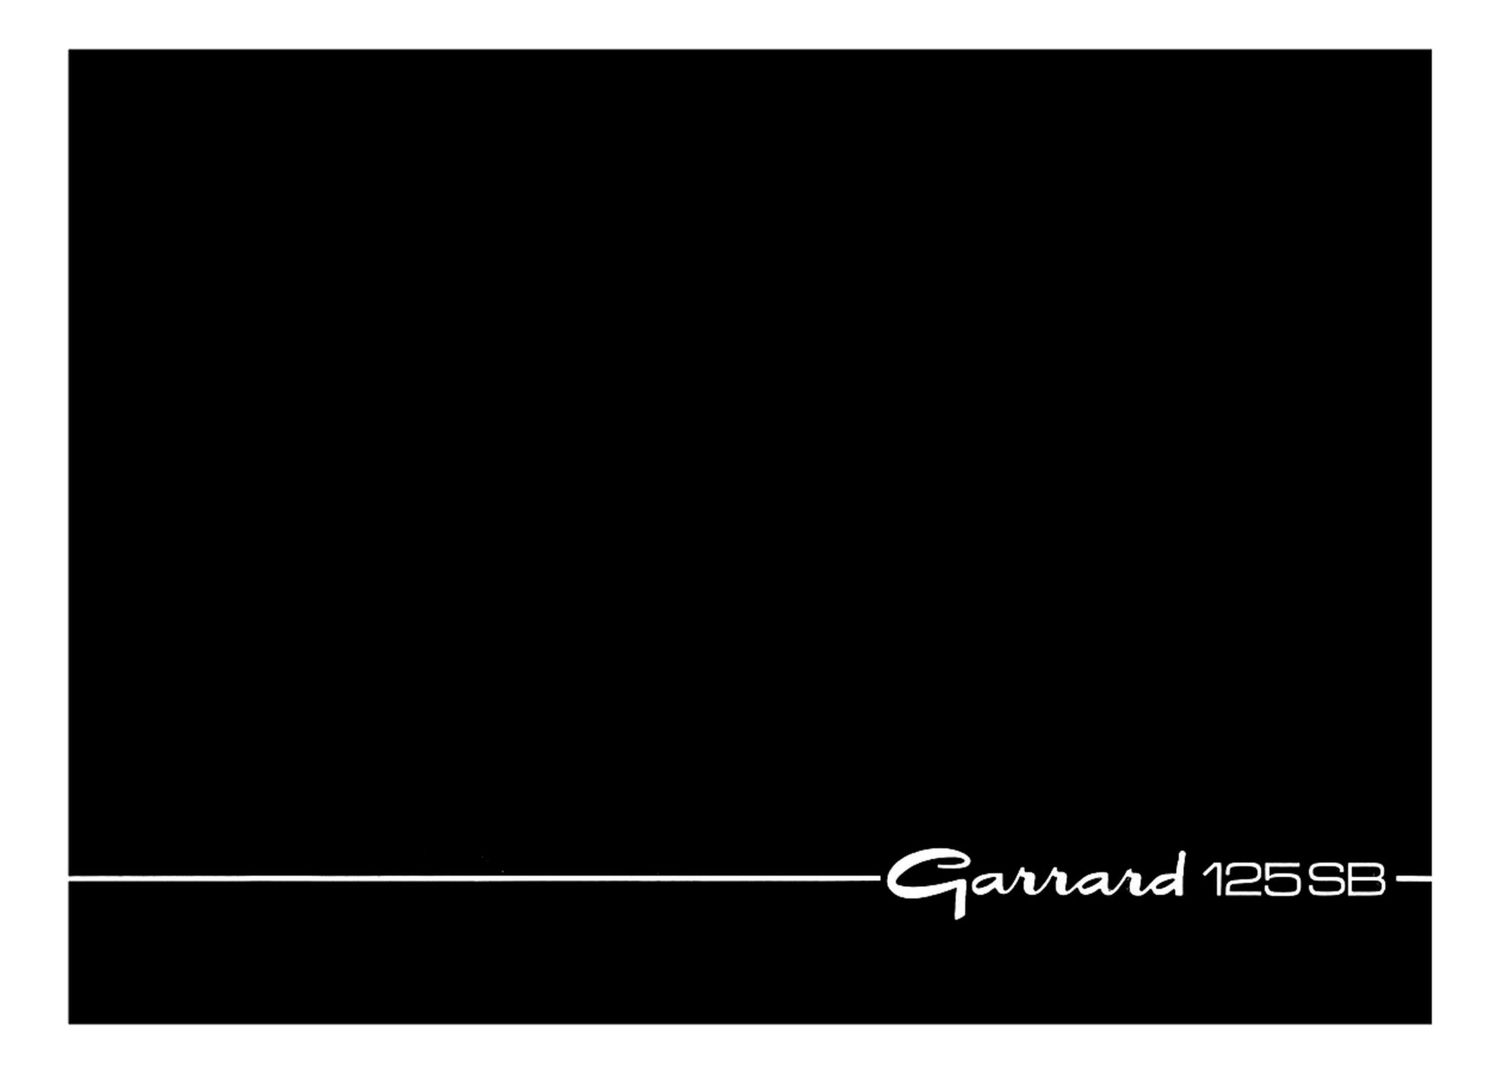 Garrard 125 SB Owners Manual